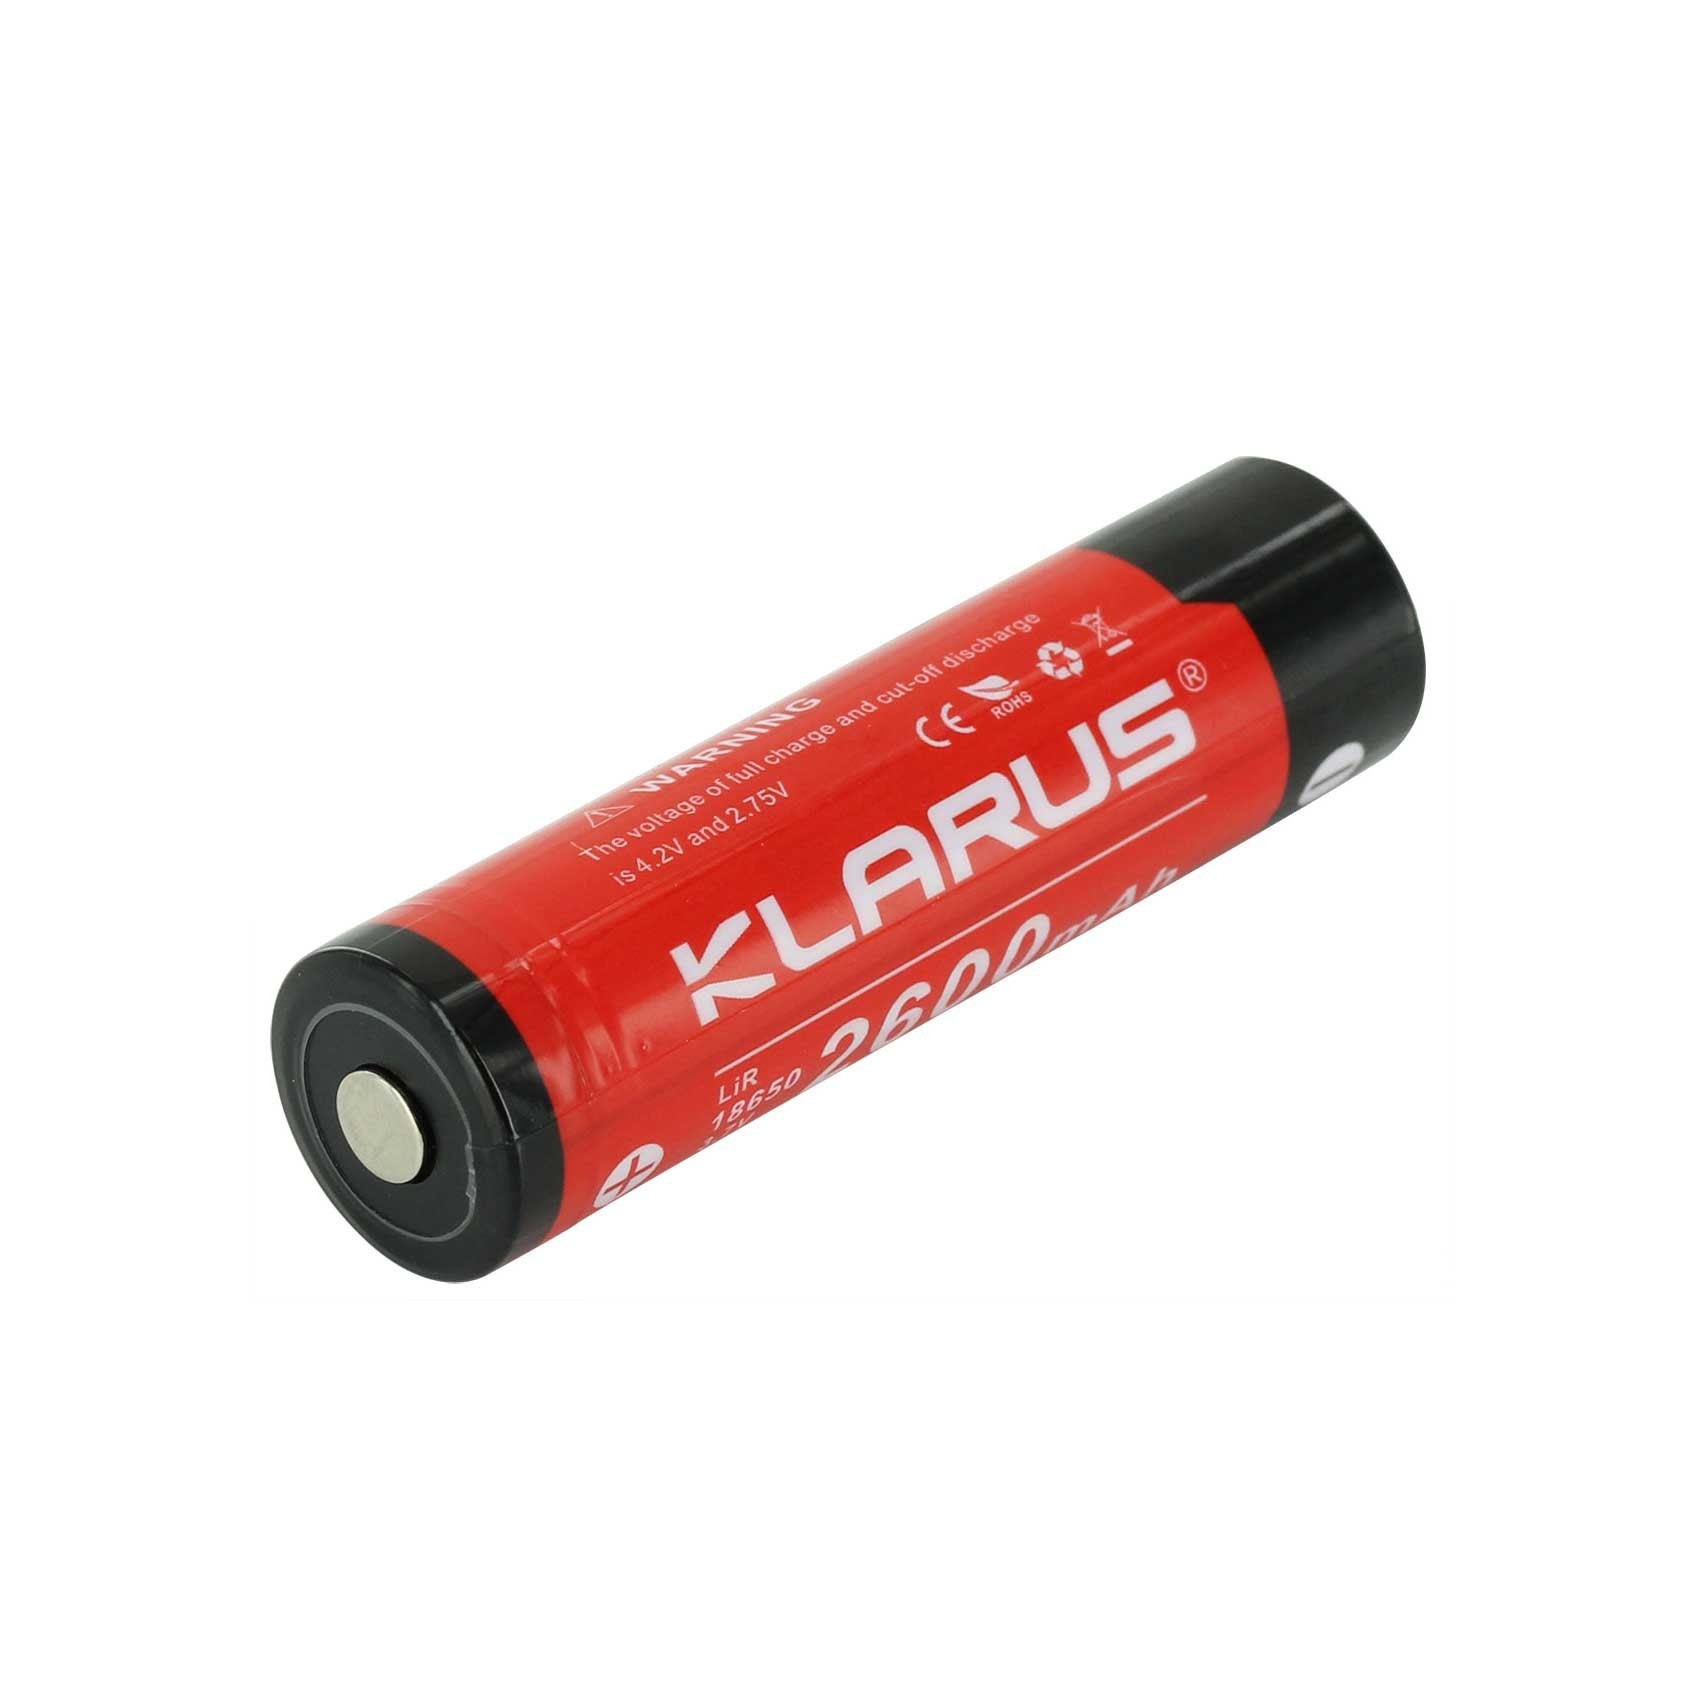 Klarus 2600mAh Rechargeable Battery - 18650